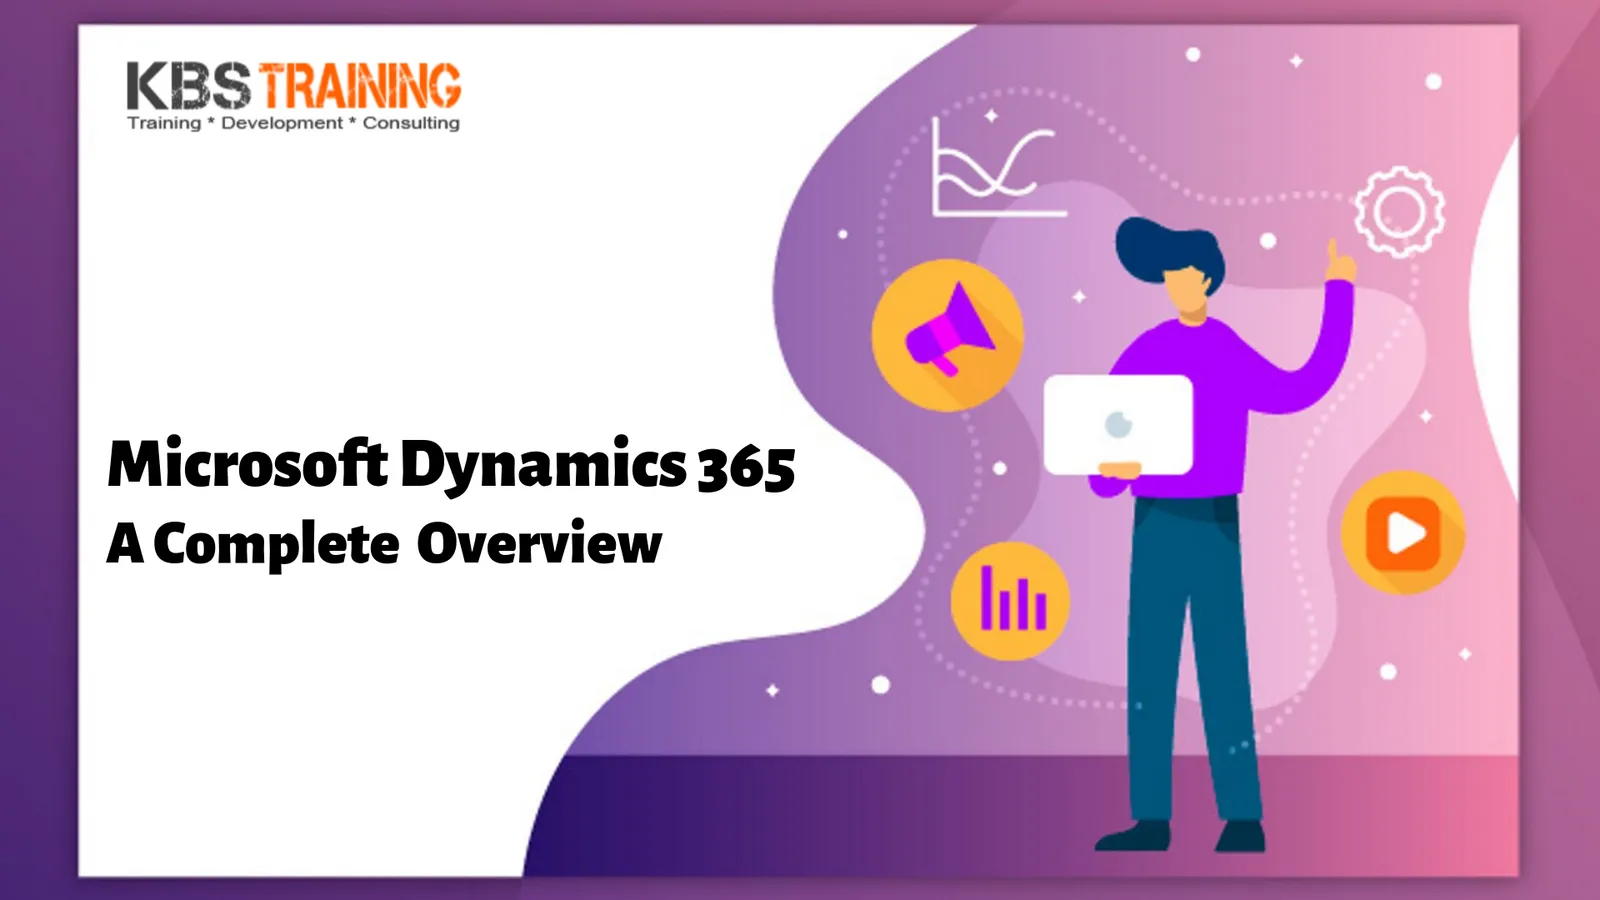 Microsoft Dynamics 365 Certification Course